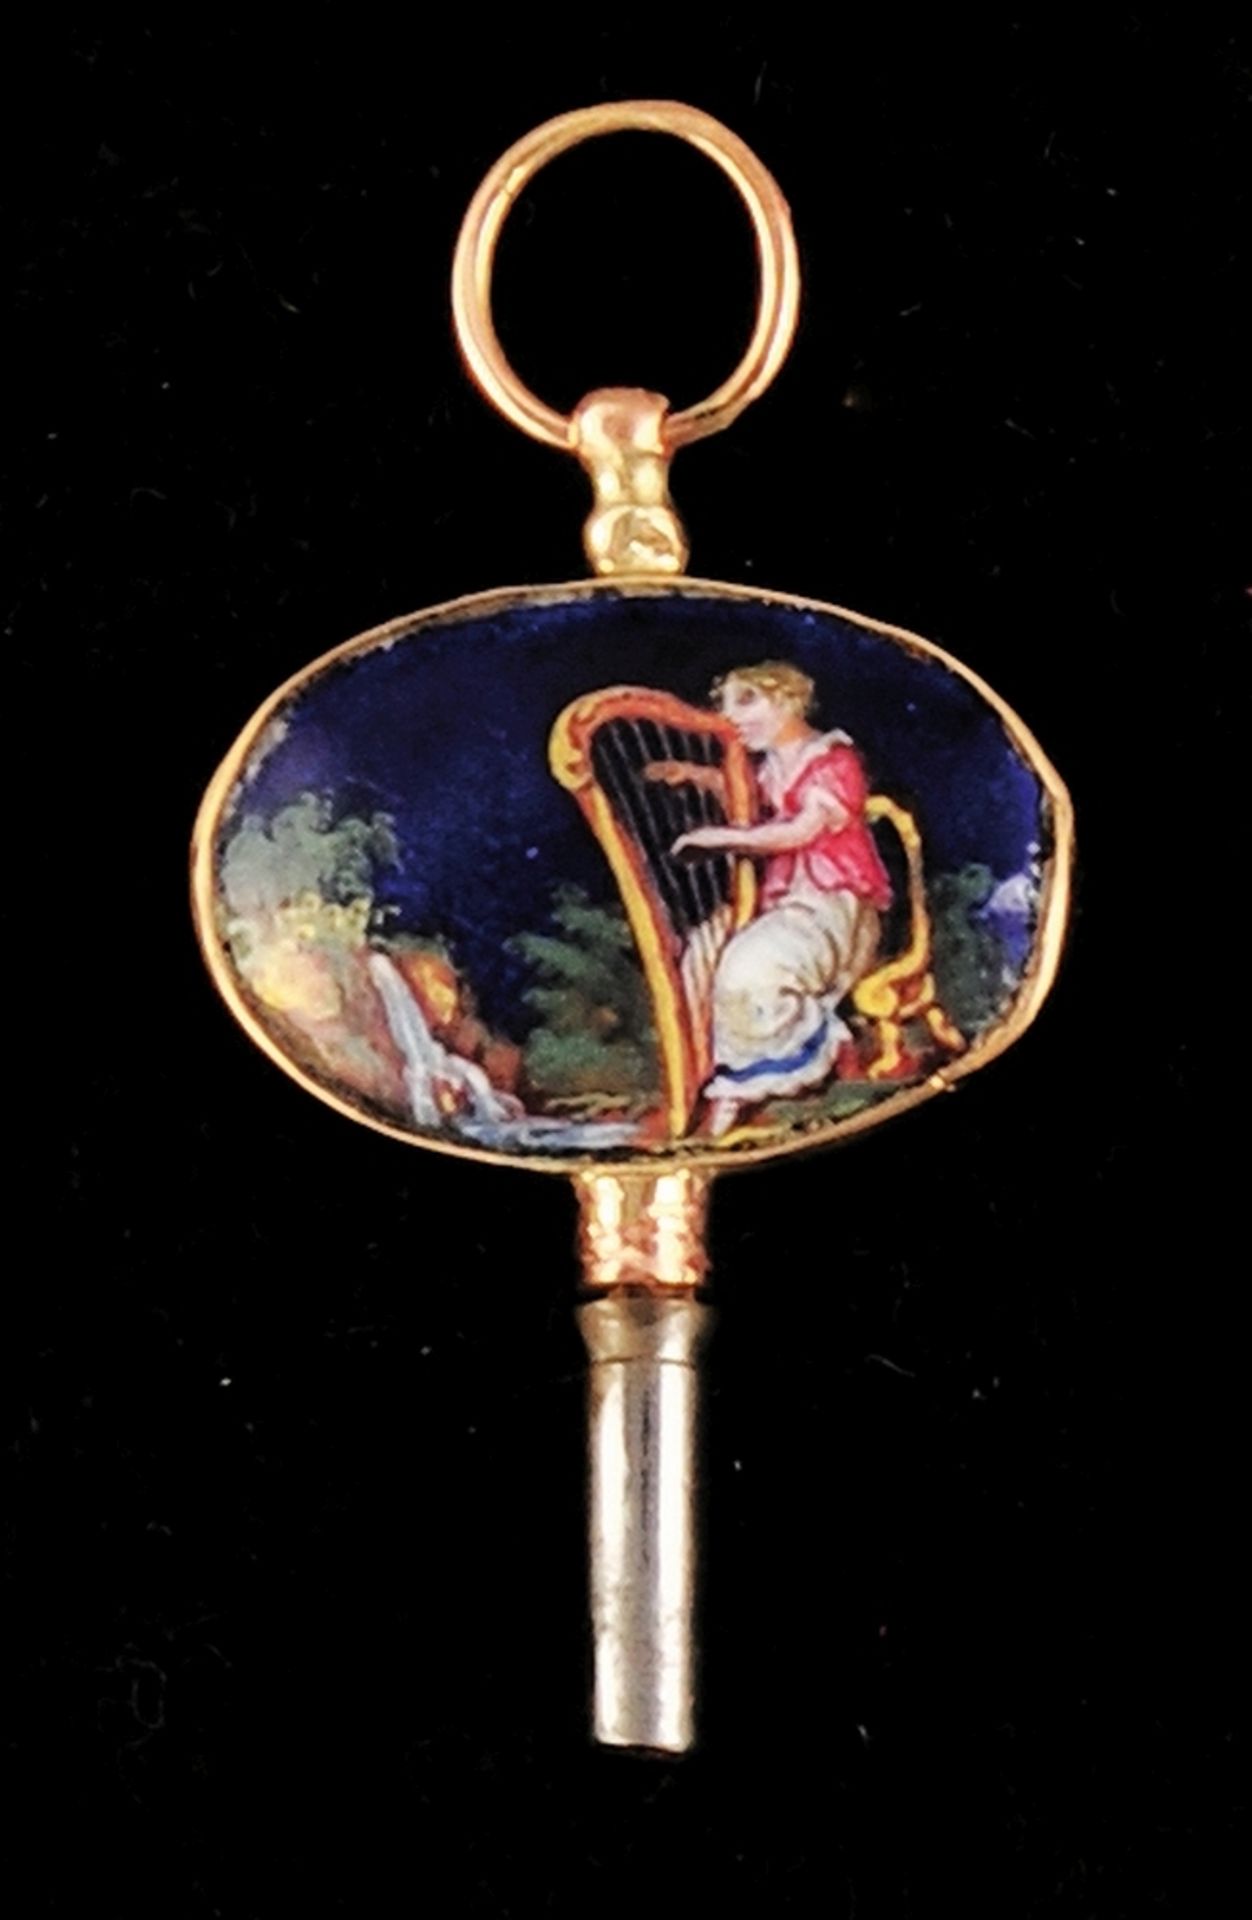 Pocket watch key with enamel medallion